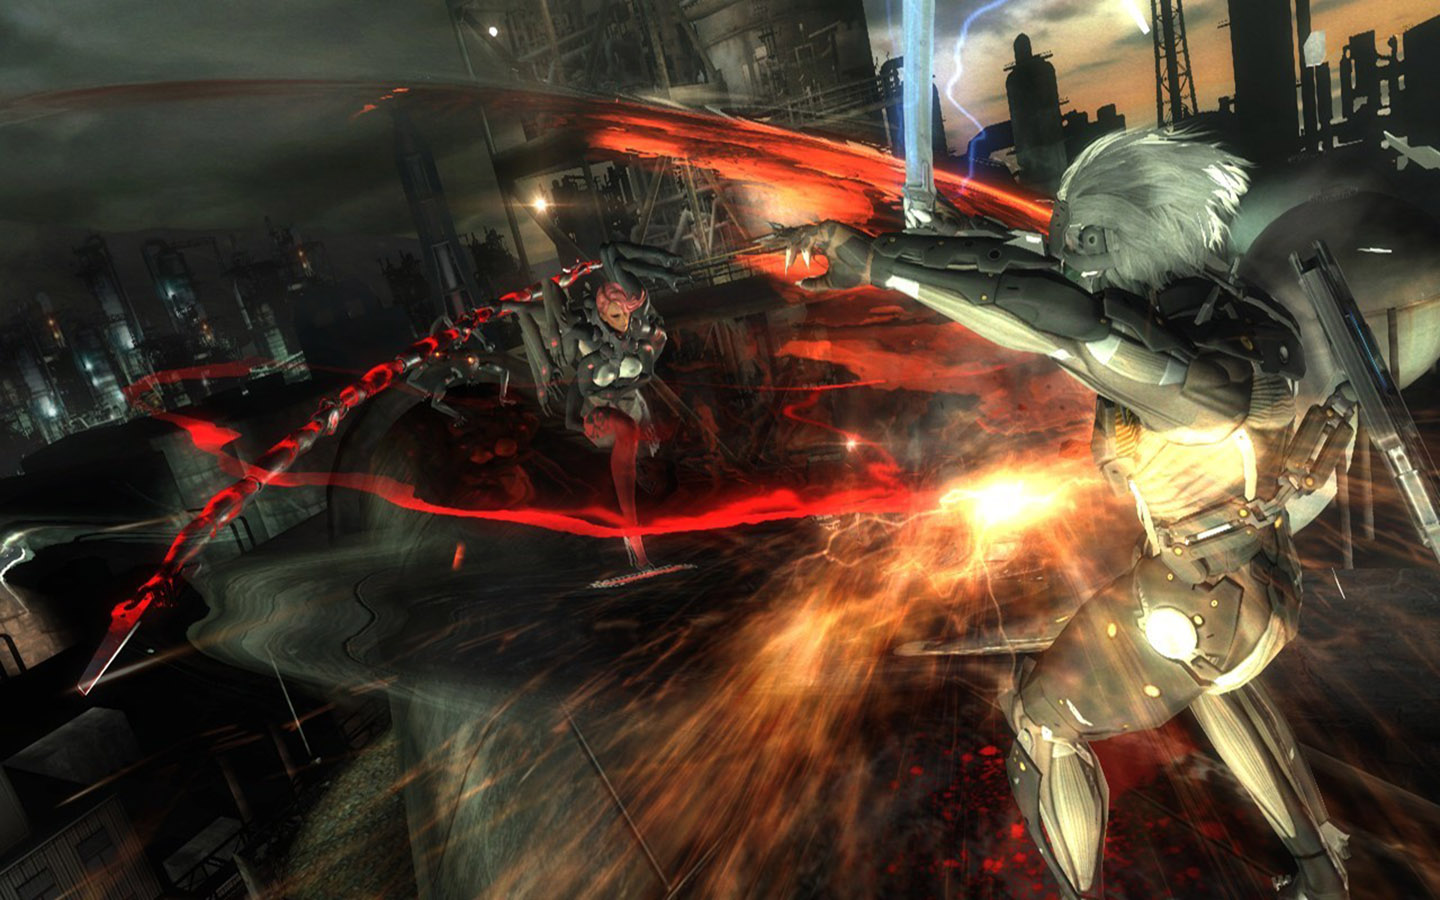 Metal Gear Rising: Revengeance Review